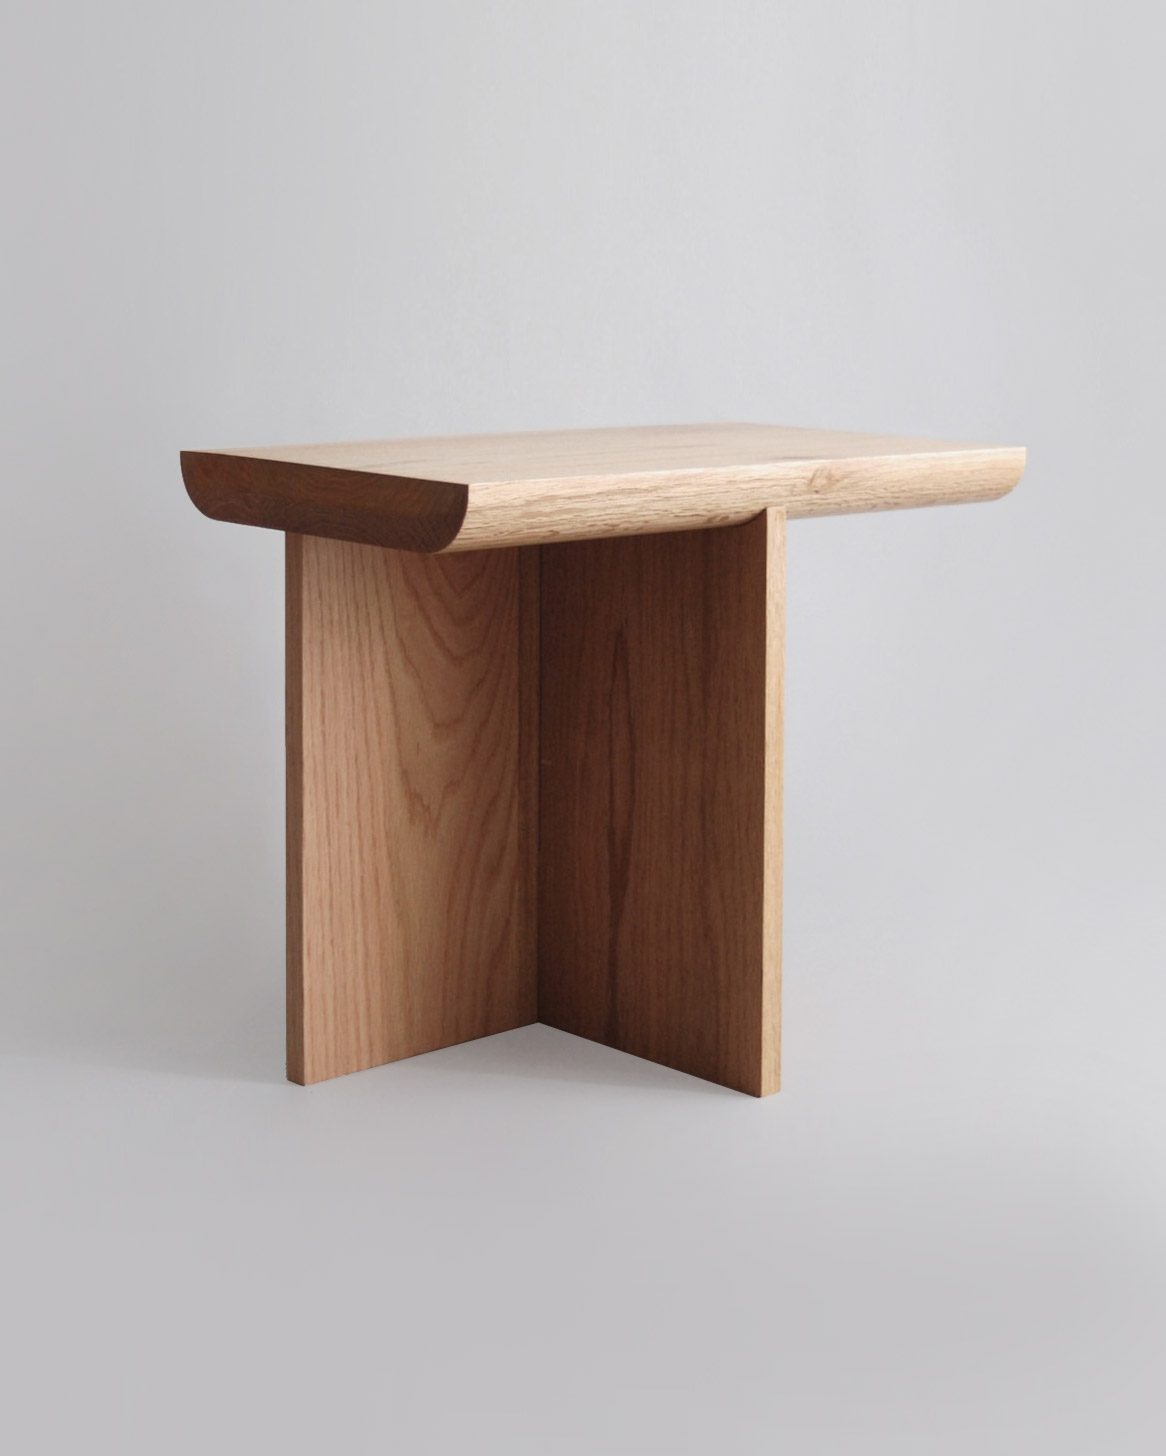 Minimalist Table Design "Norte" by Dear Durango | Aesence